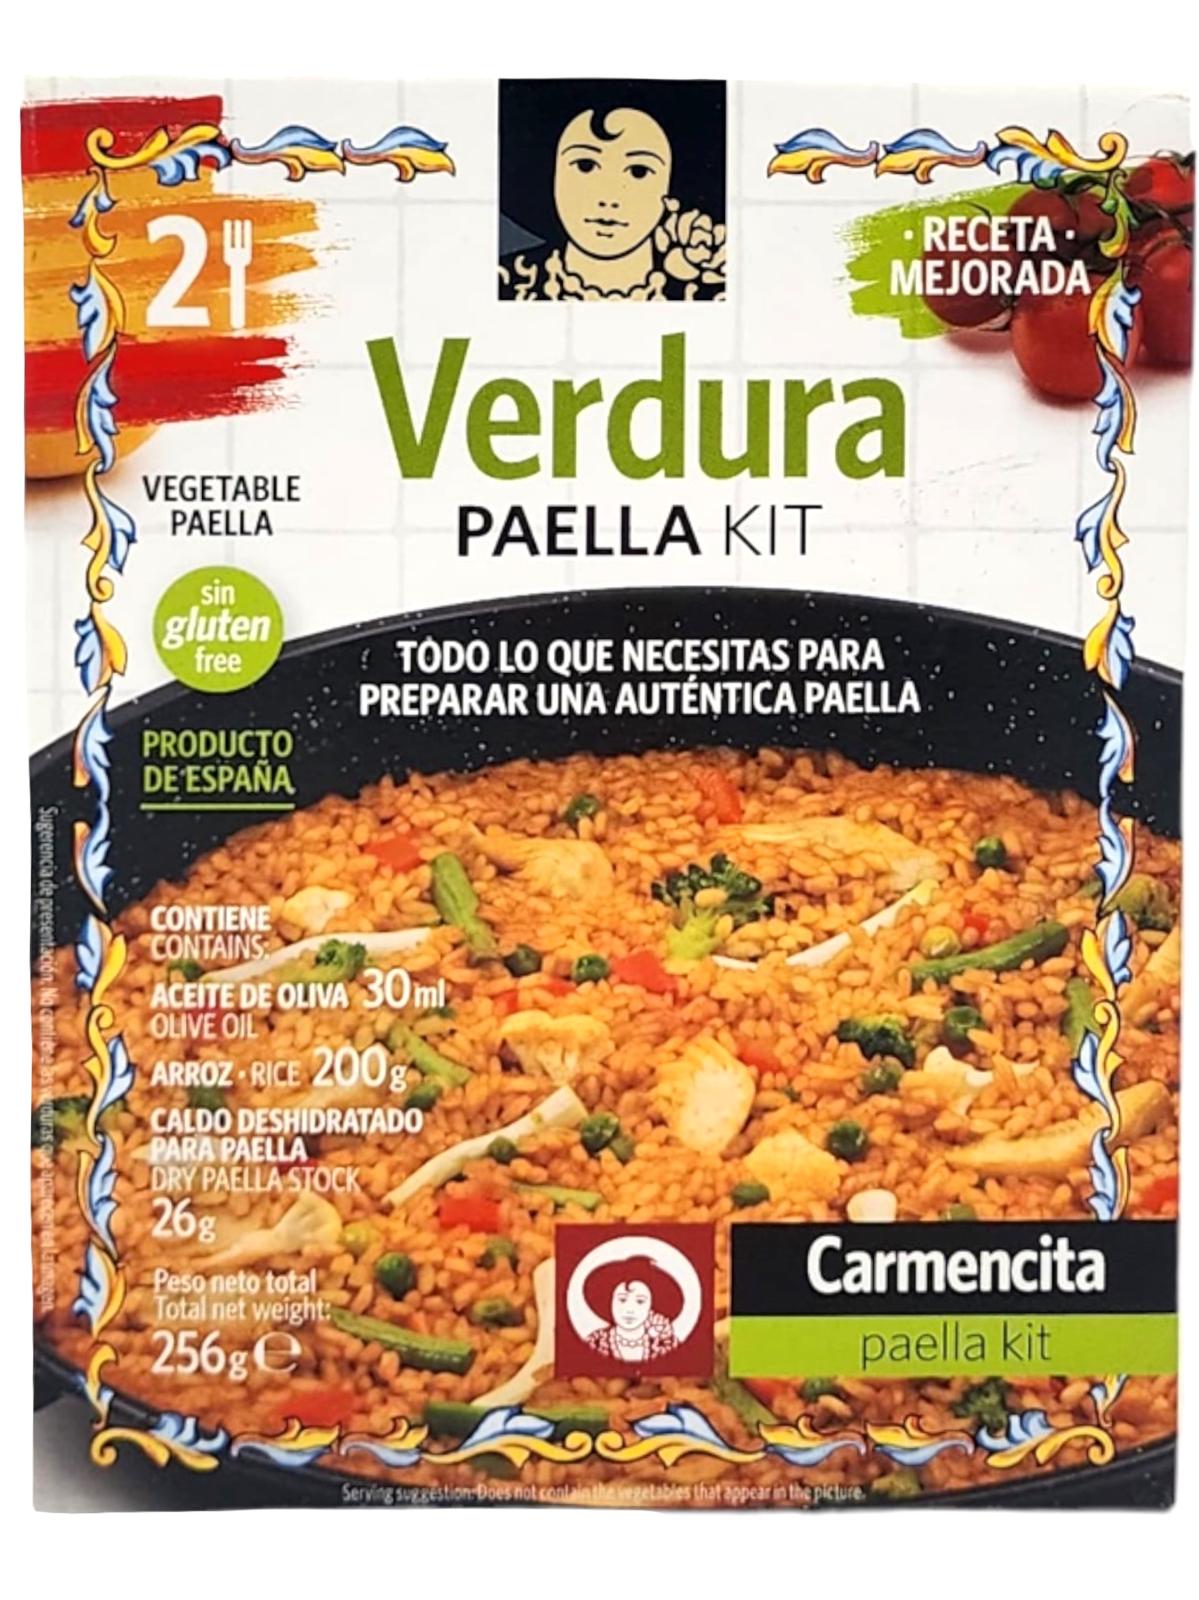 Carmencita Vegetable Paella Kit 256g with Dacsa RIce 1kg Multi Pack